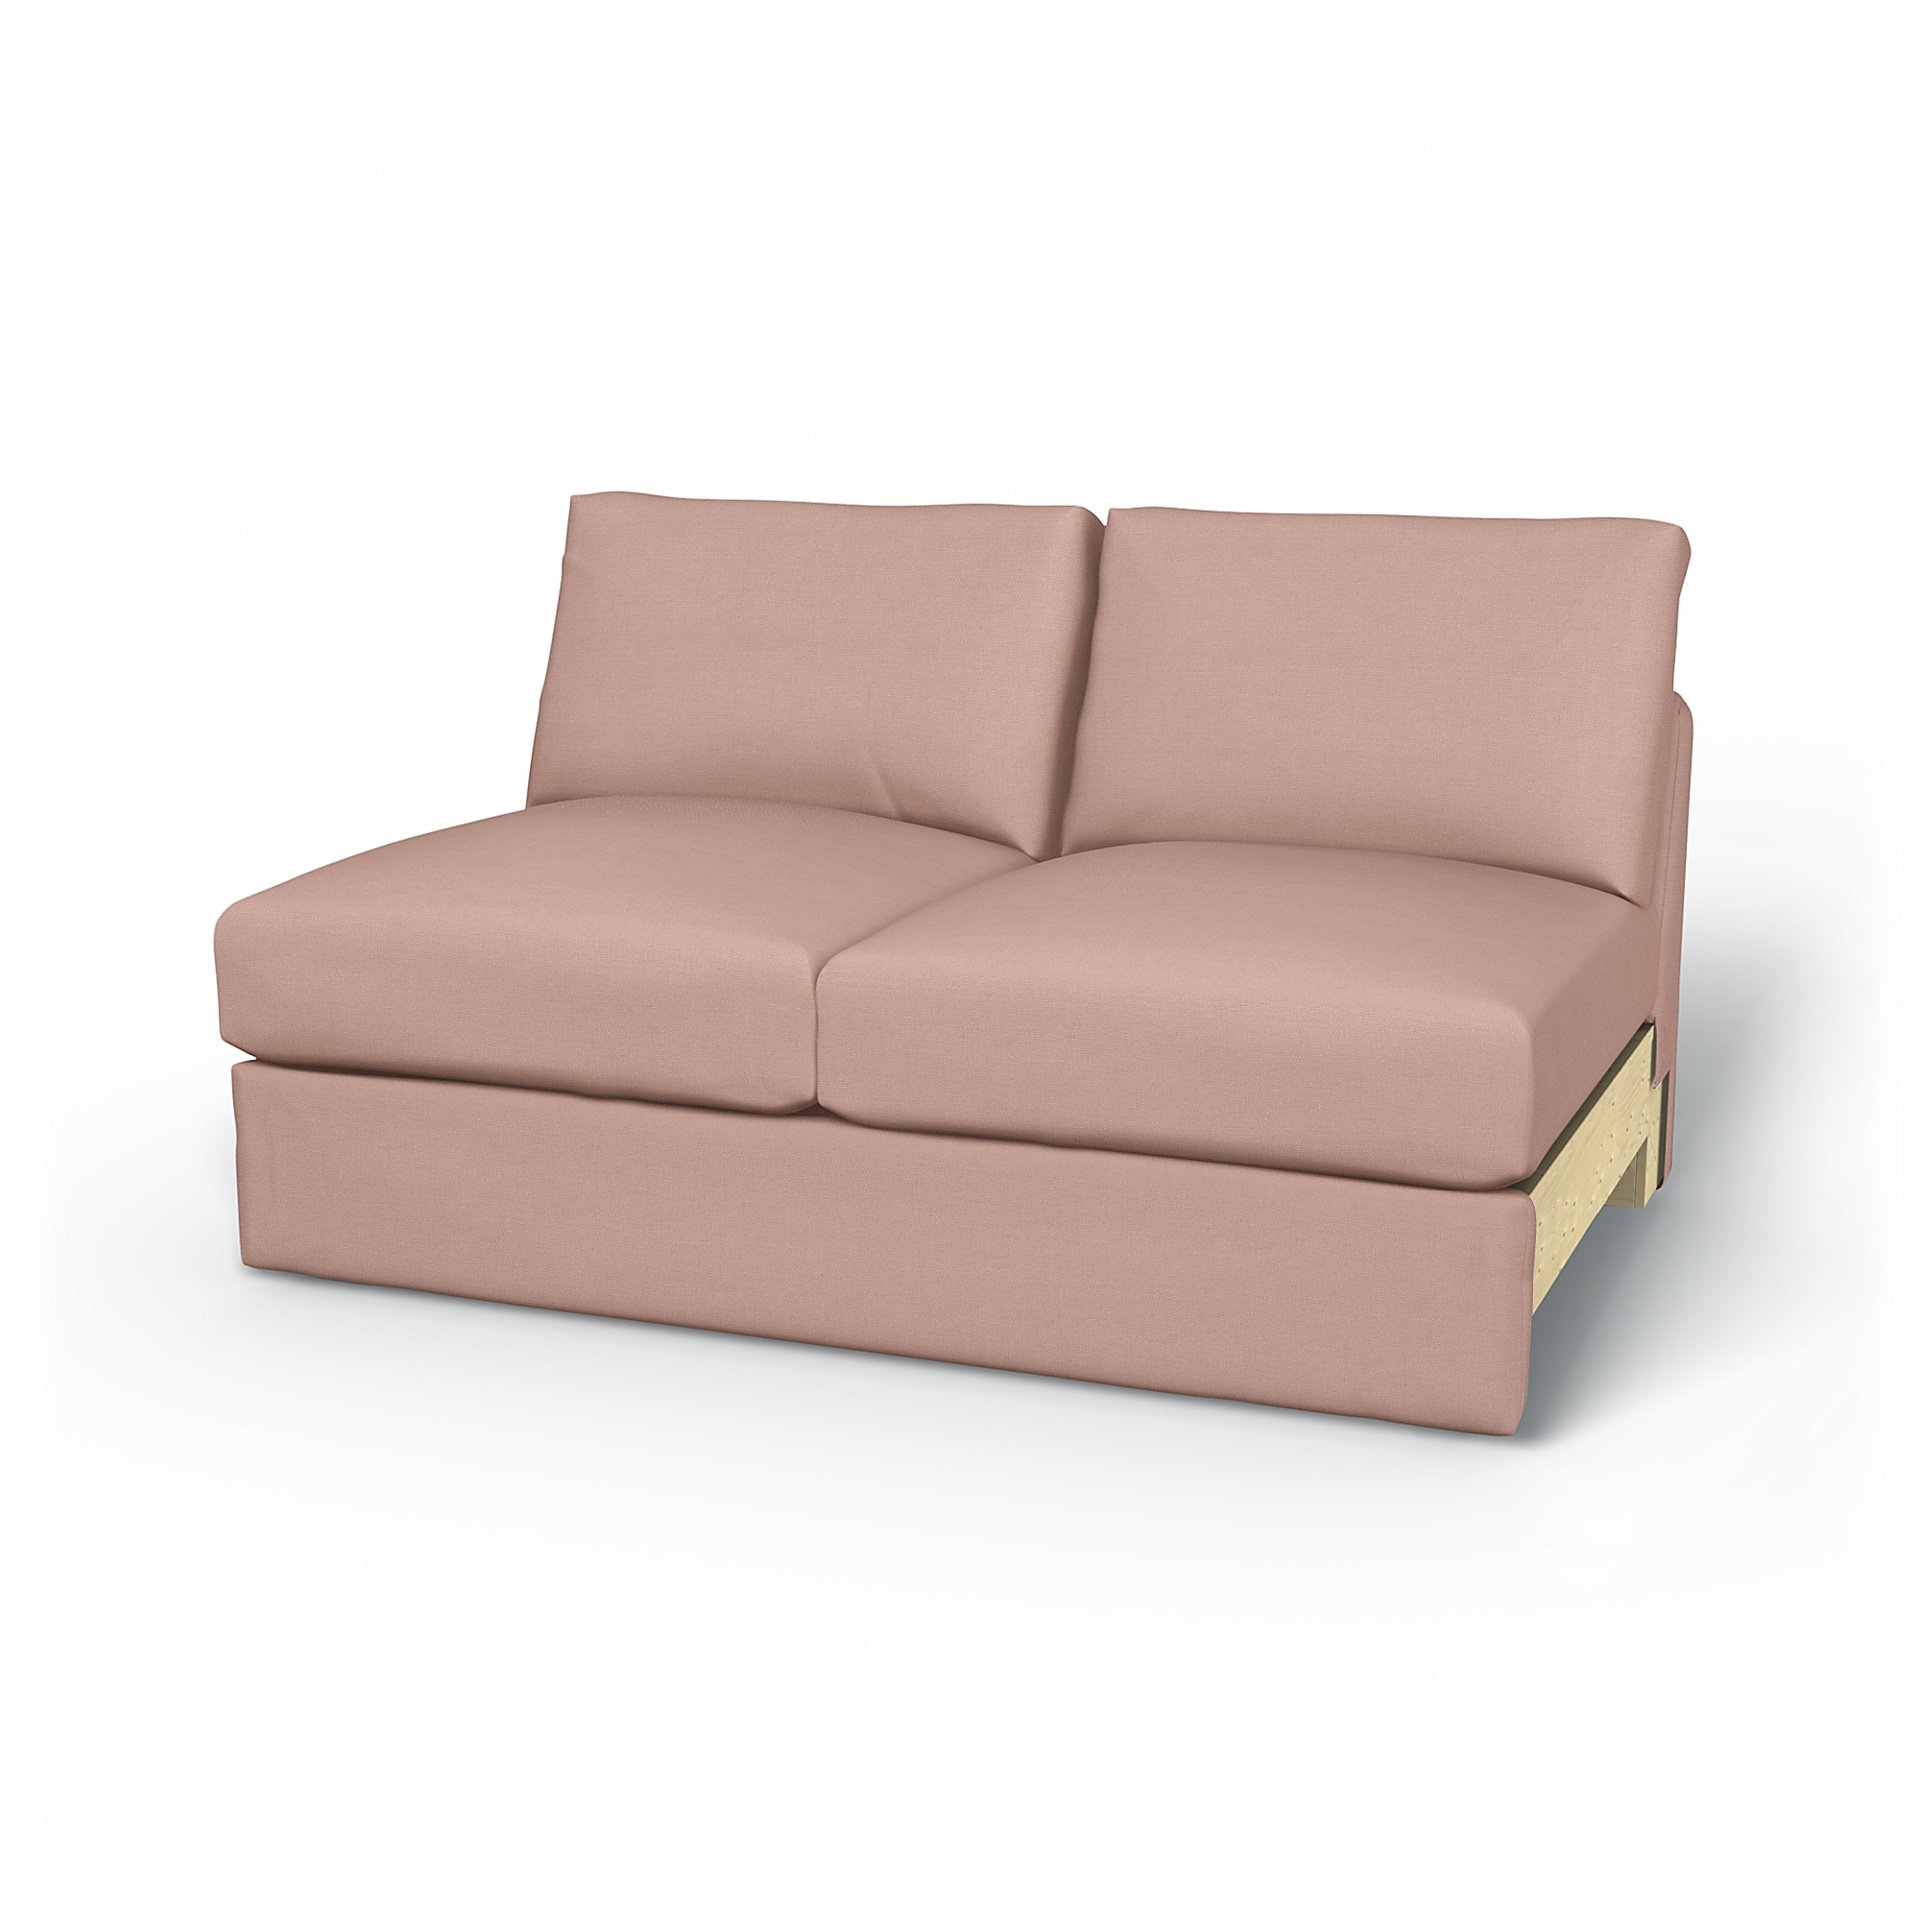 IKEA - Vimle 2 Seat Section Cover, Blush, Linen - Bemz